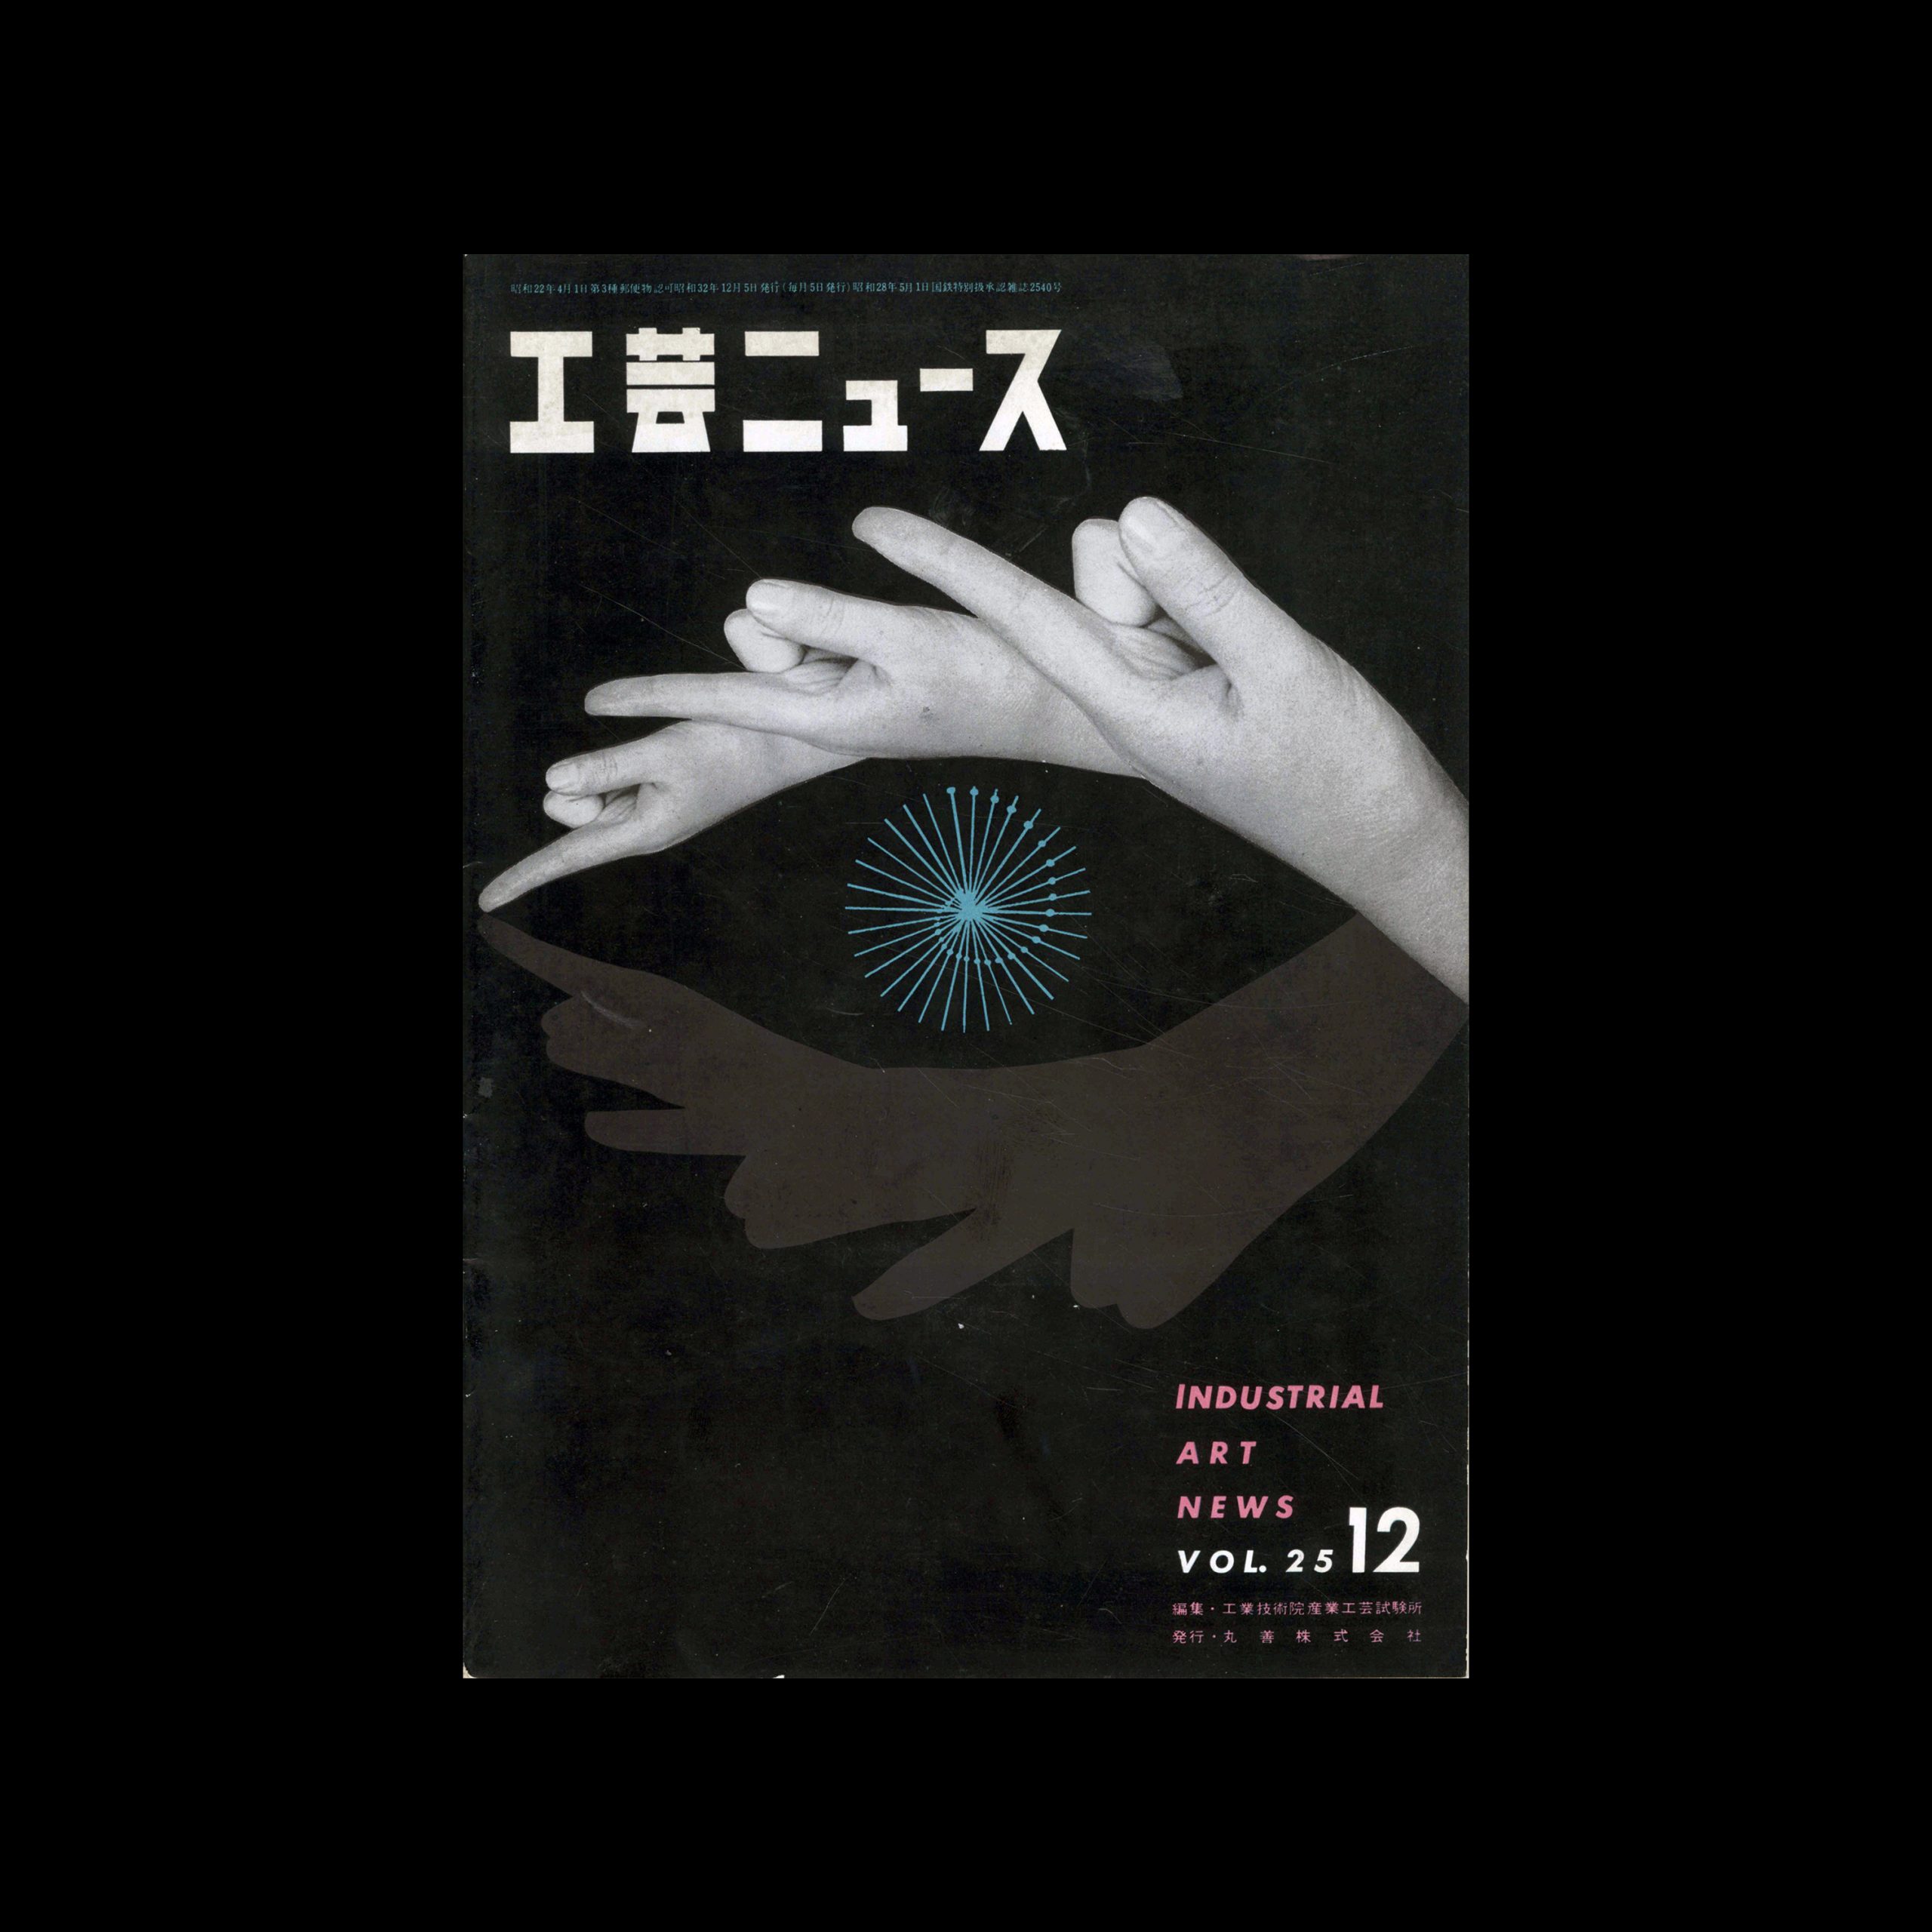 Industrial Art News - Vol. 25, No. 11, December 1957. Cover design by Rikiya Miyano